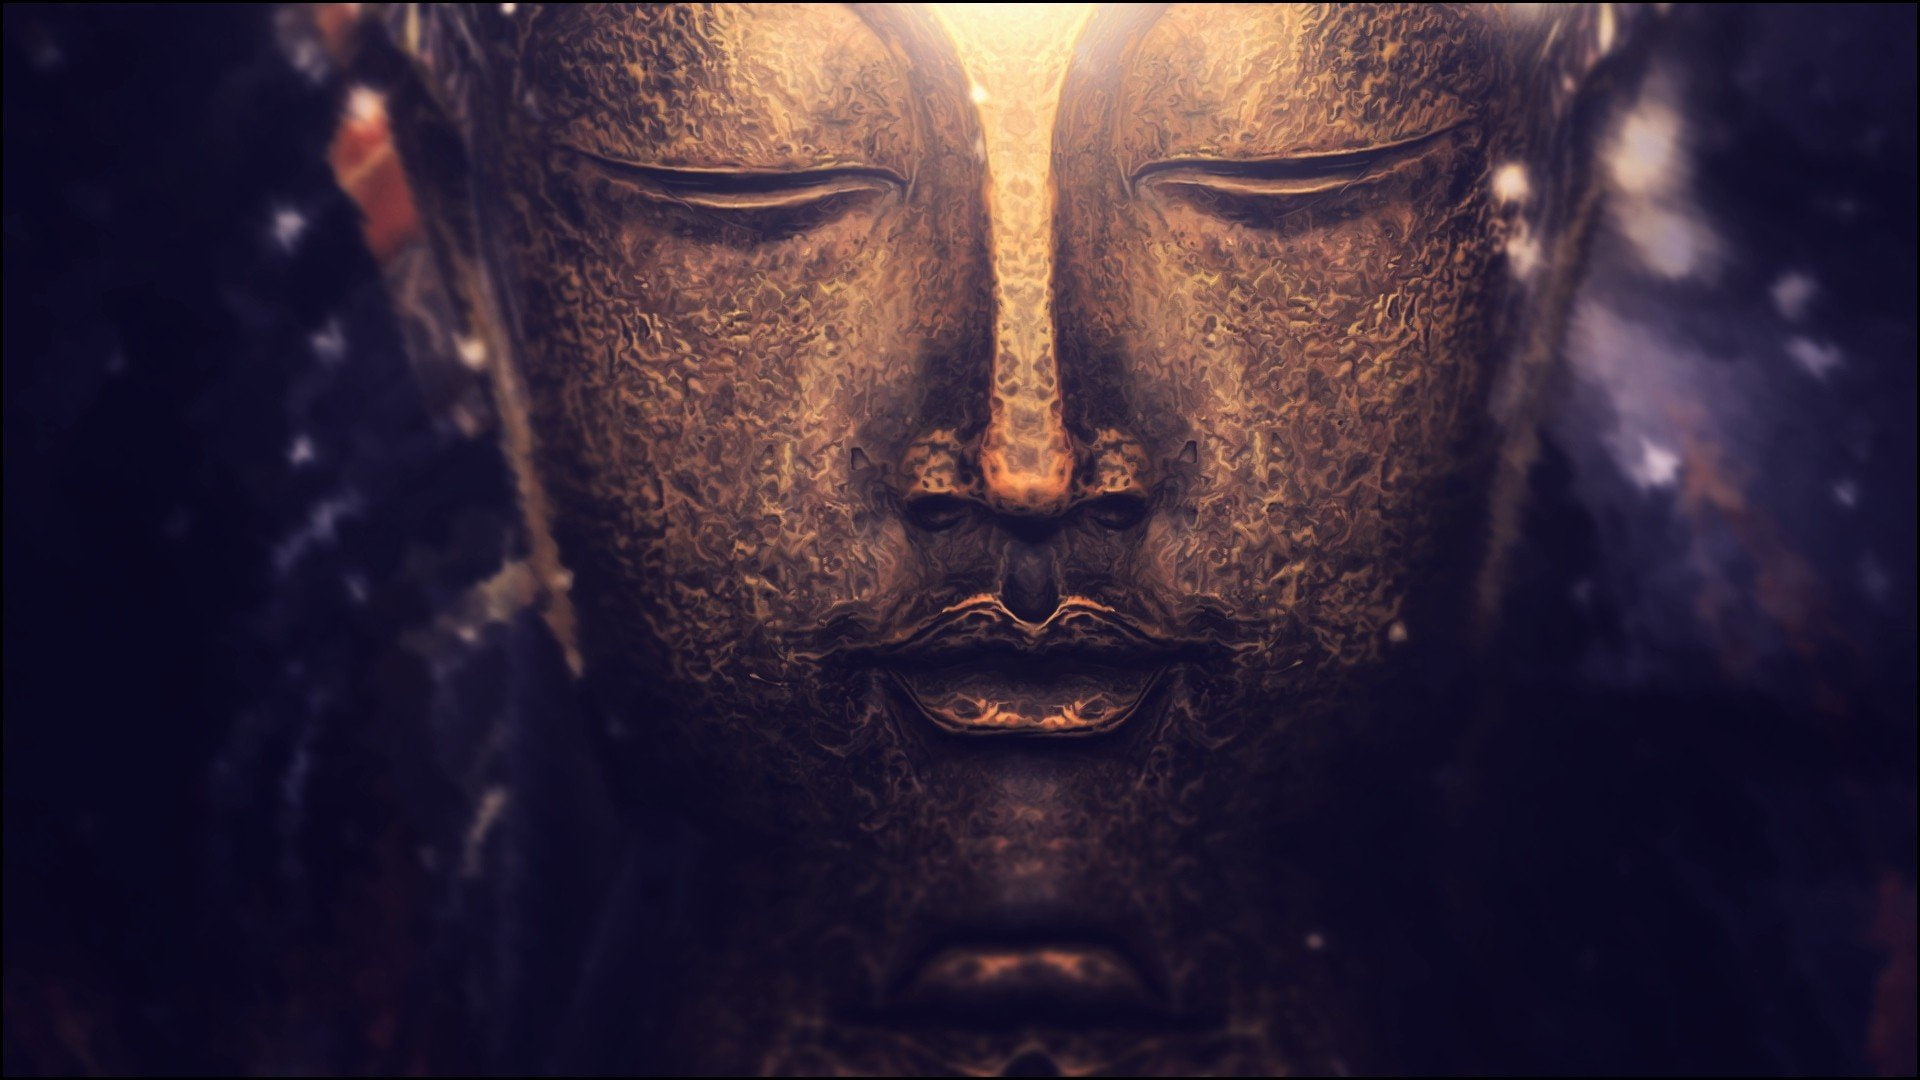 buddha meditation spiritual buddhism bokeh lights purple gold macro photography depth of field zen